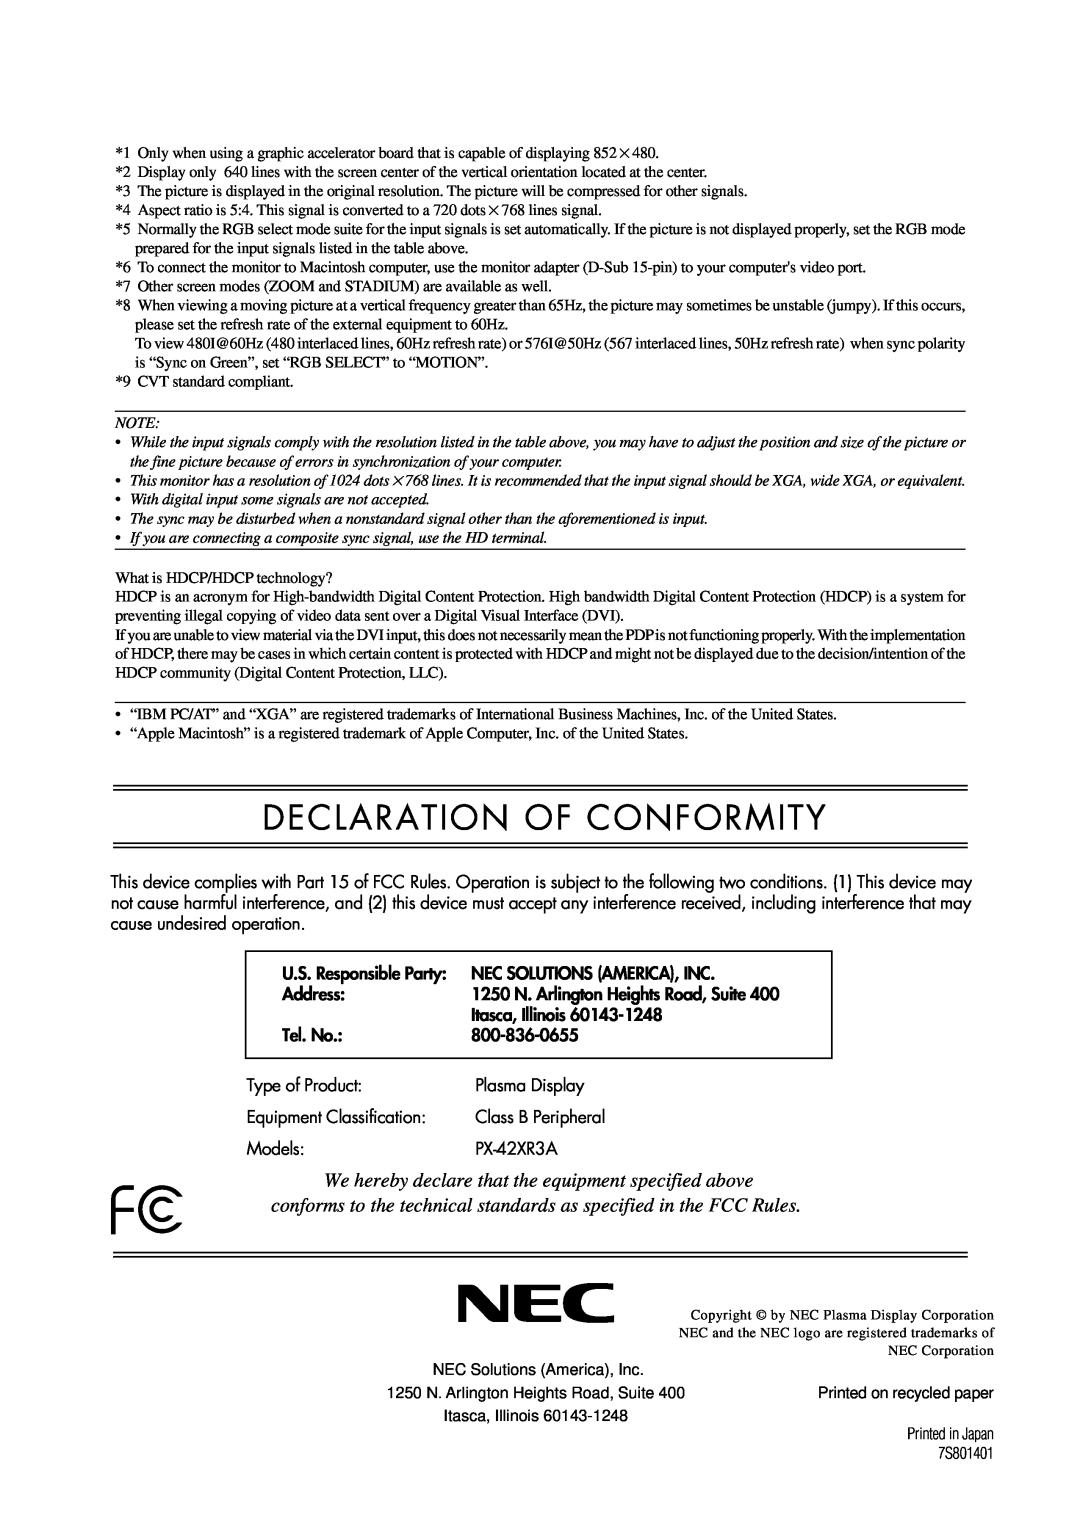 NEC PX-42XR3A operation manual Declaration Of Conformity 